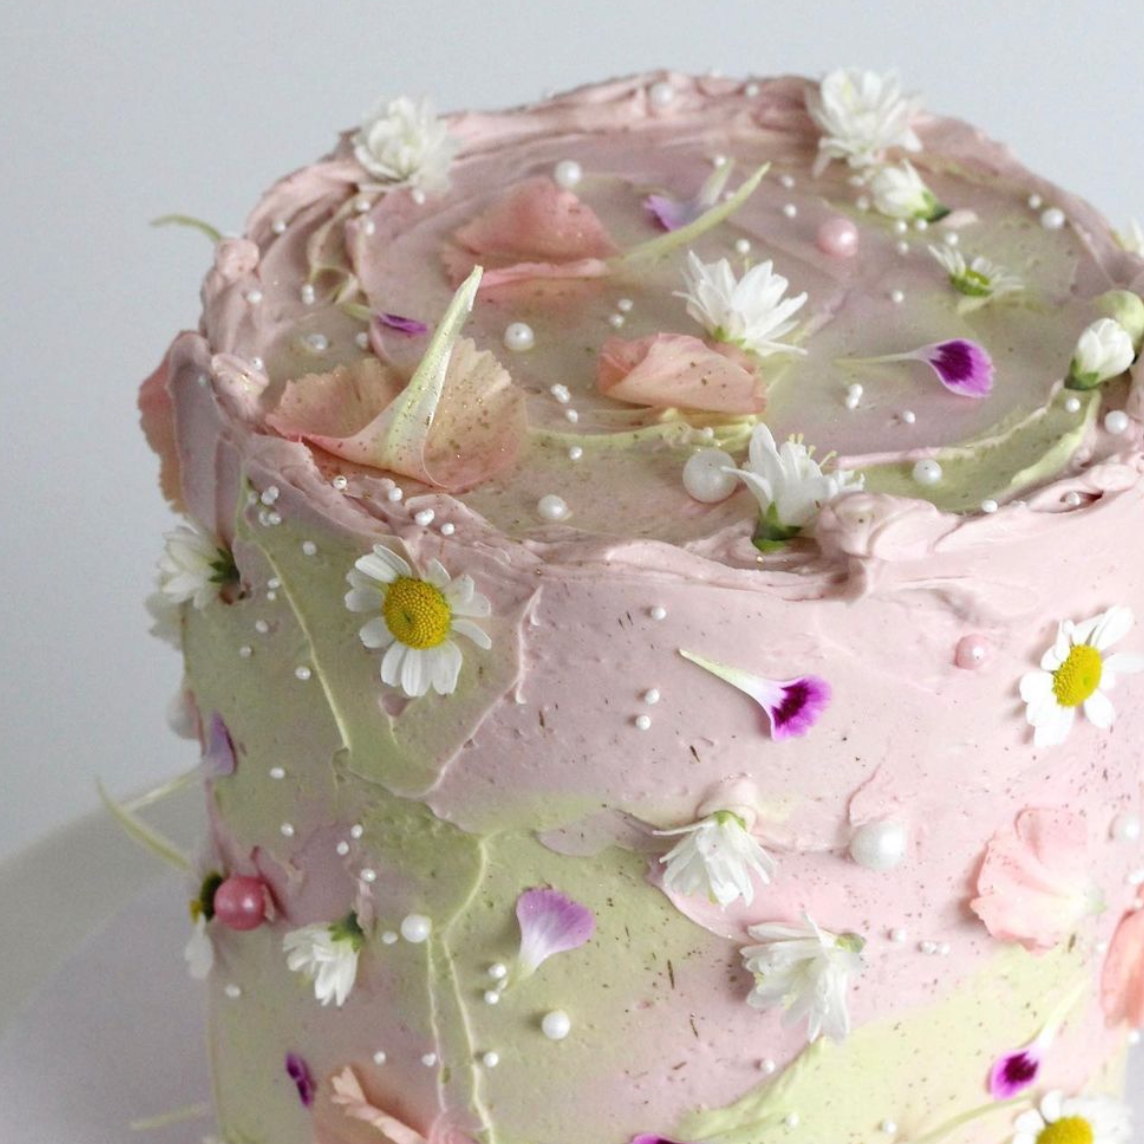 Fairy Blossom cake with seasonal flowers